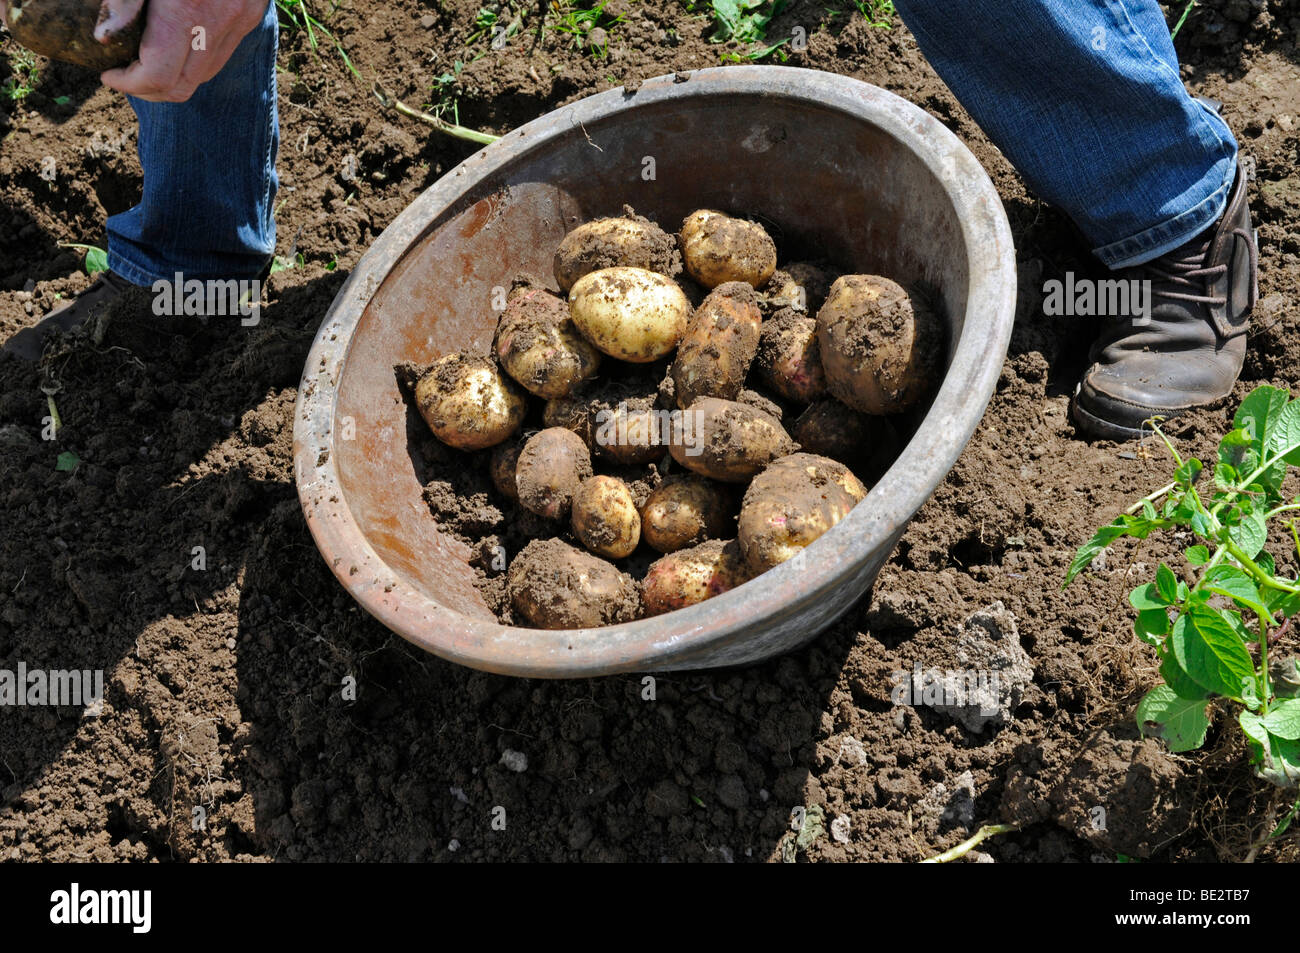 Harvesting home-grown potatoes Stock Photo